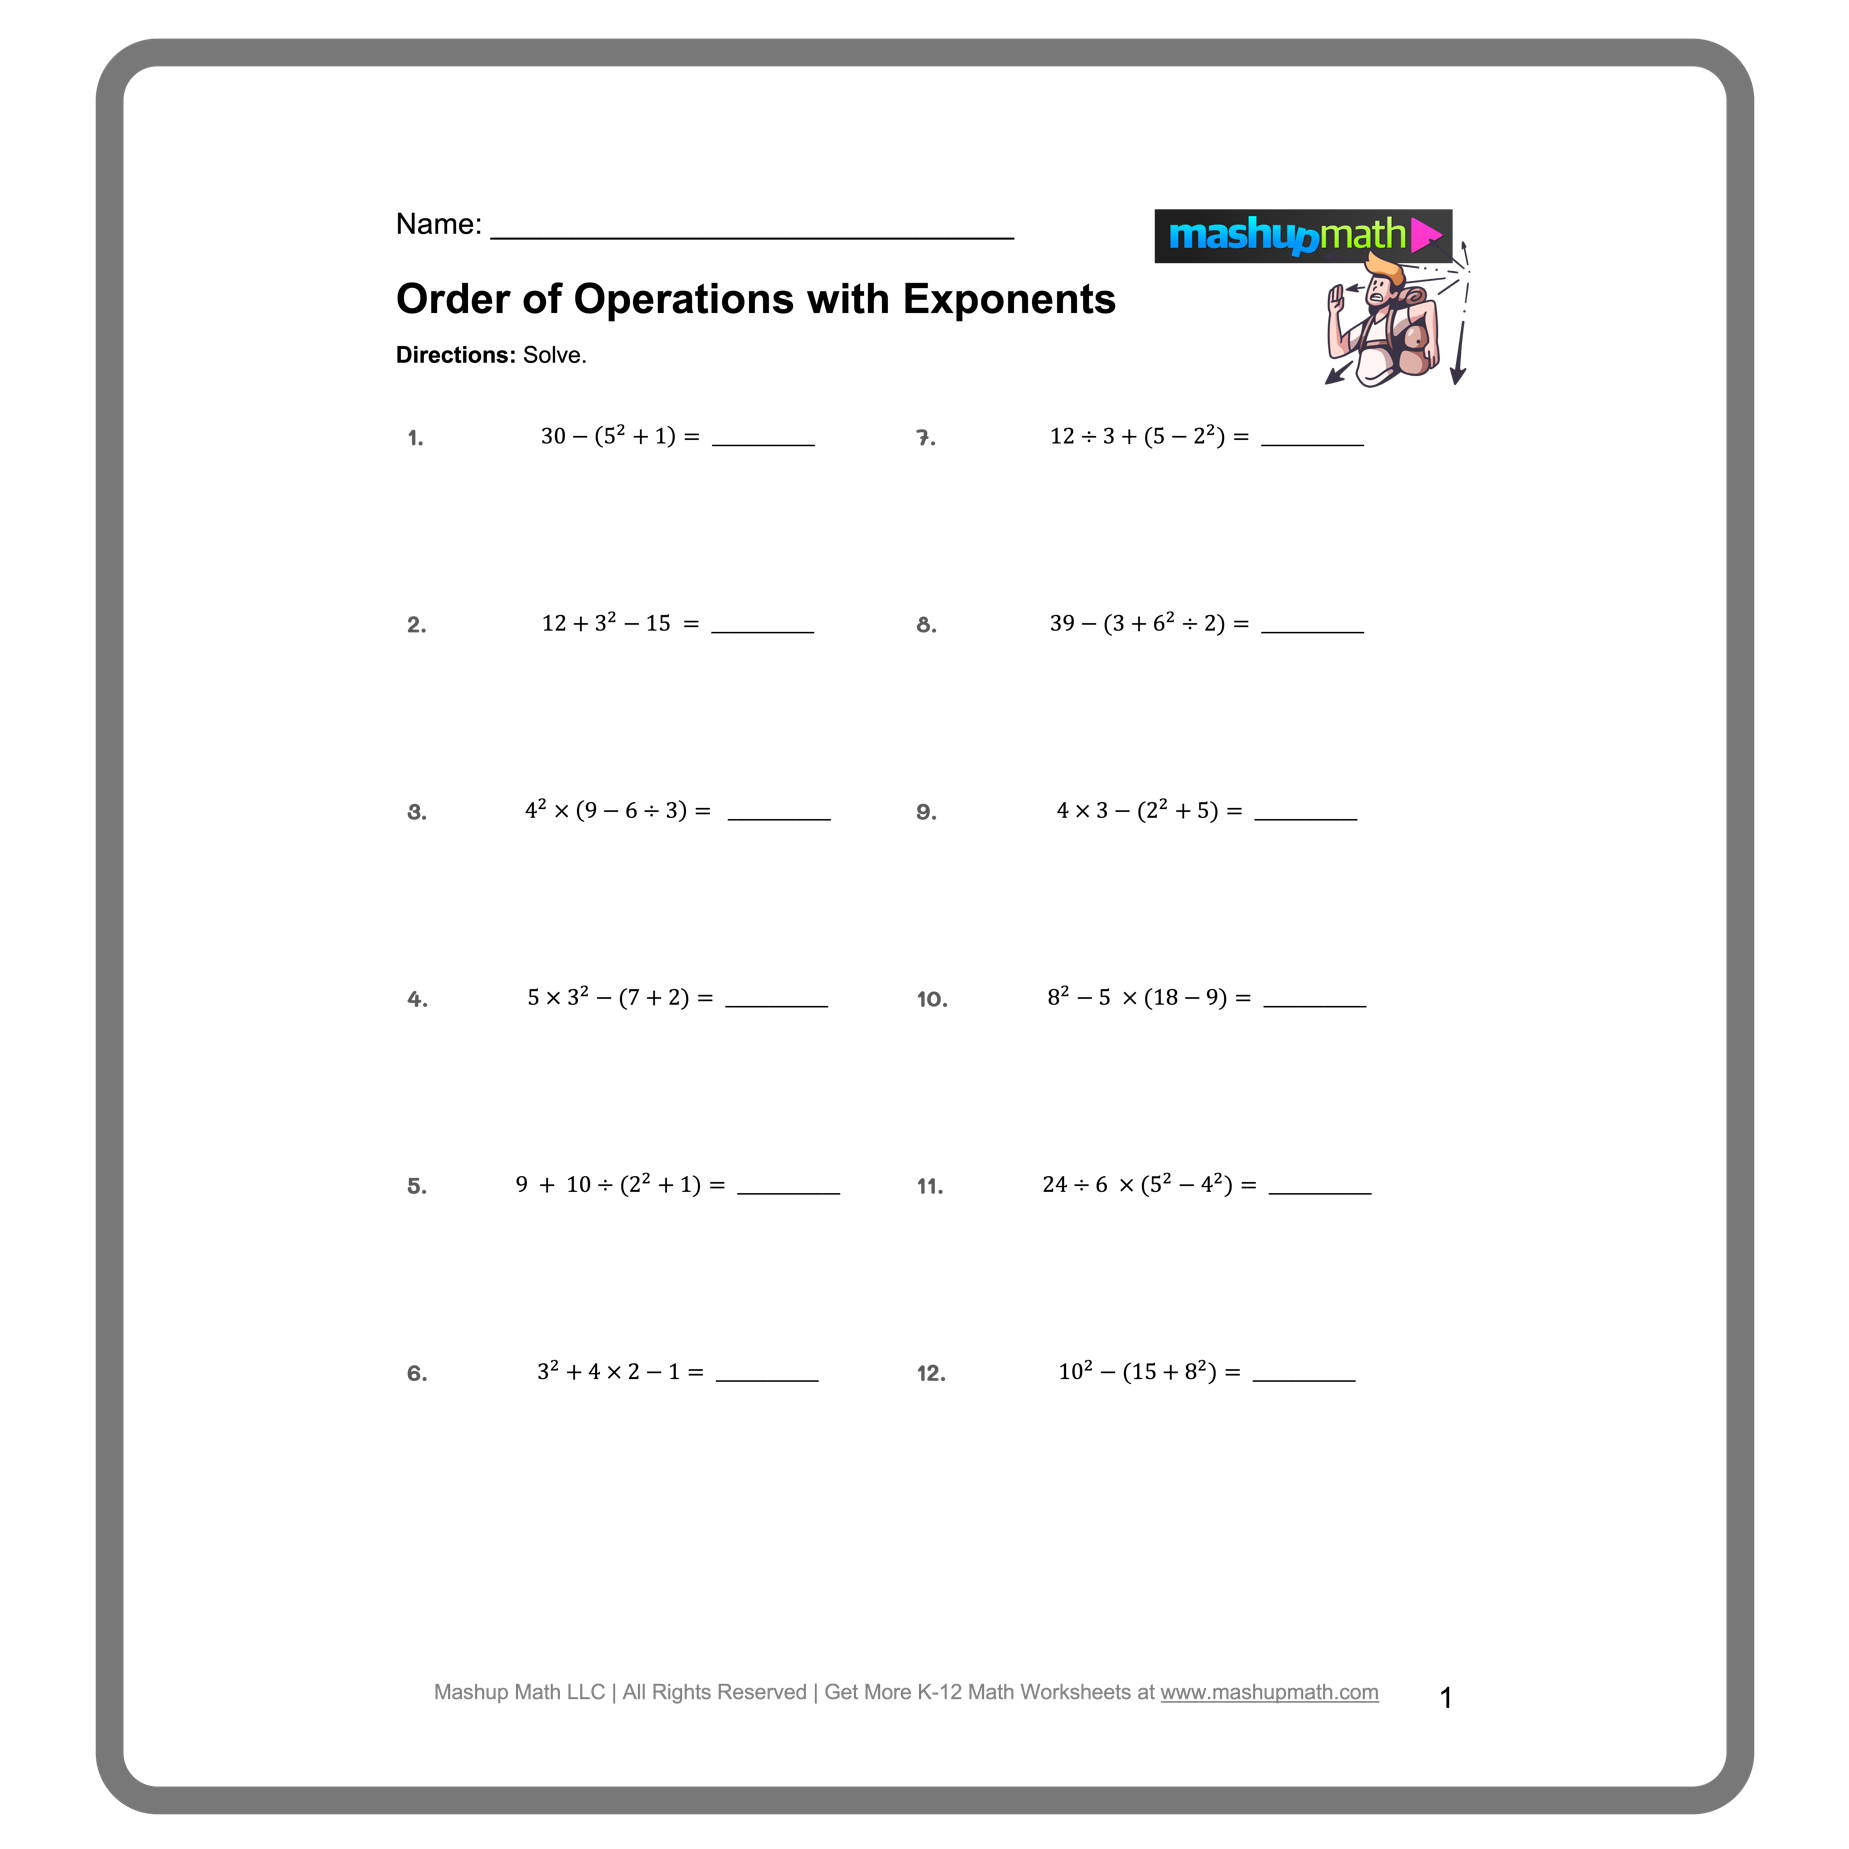 order of operations problem solving worksheets